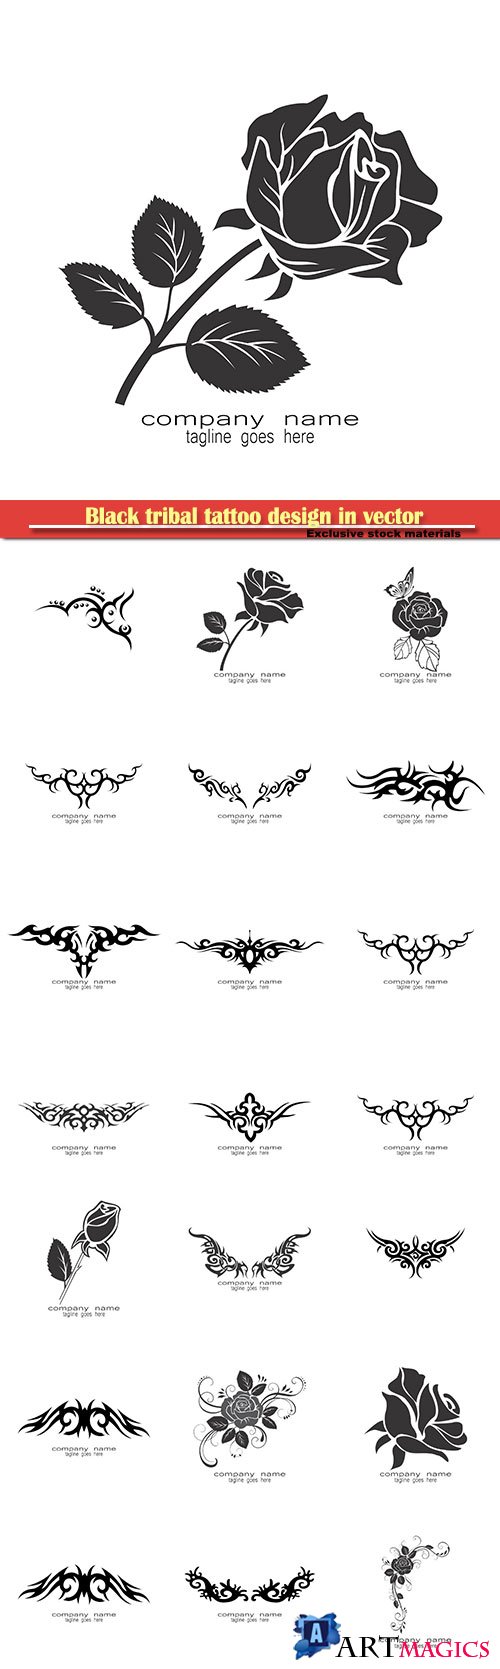 Black tribal tattoo design in vector illustration